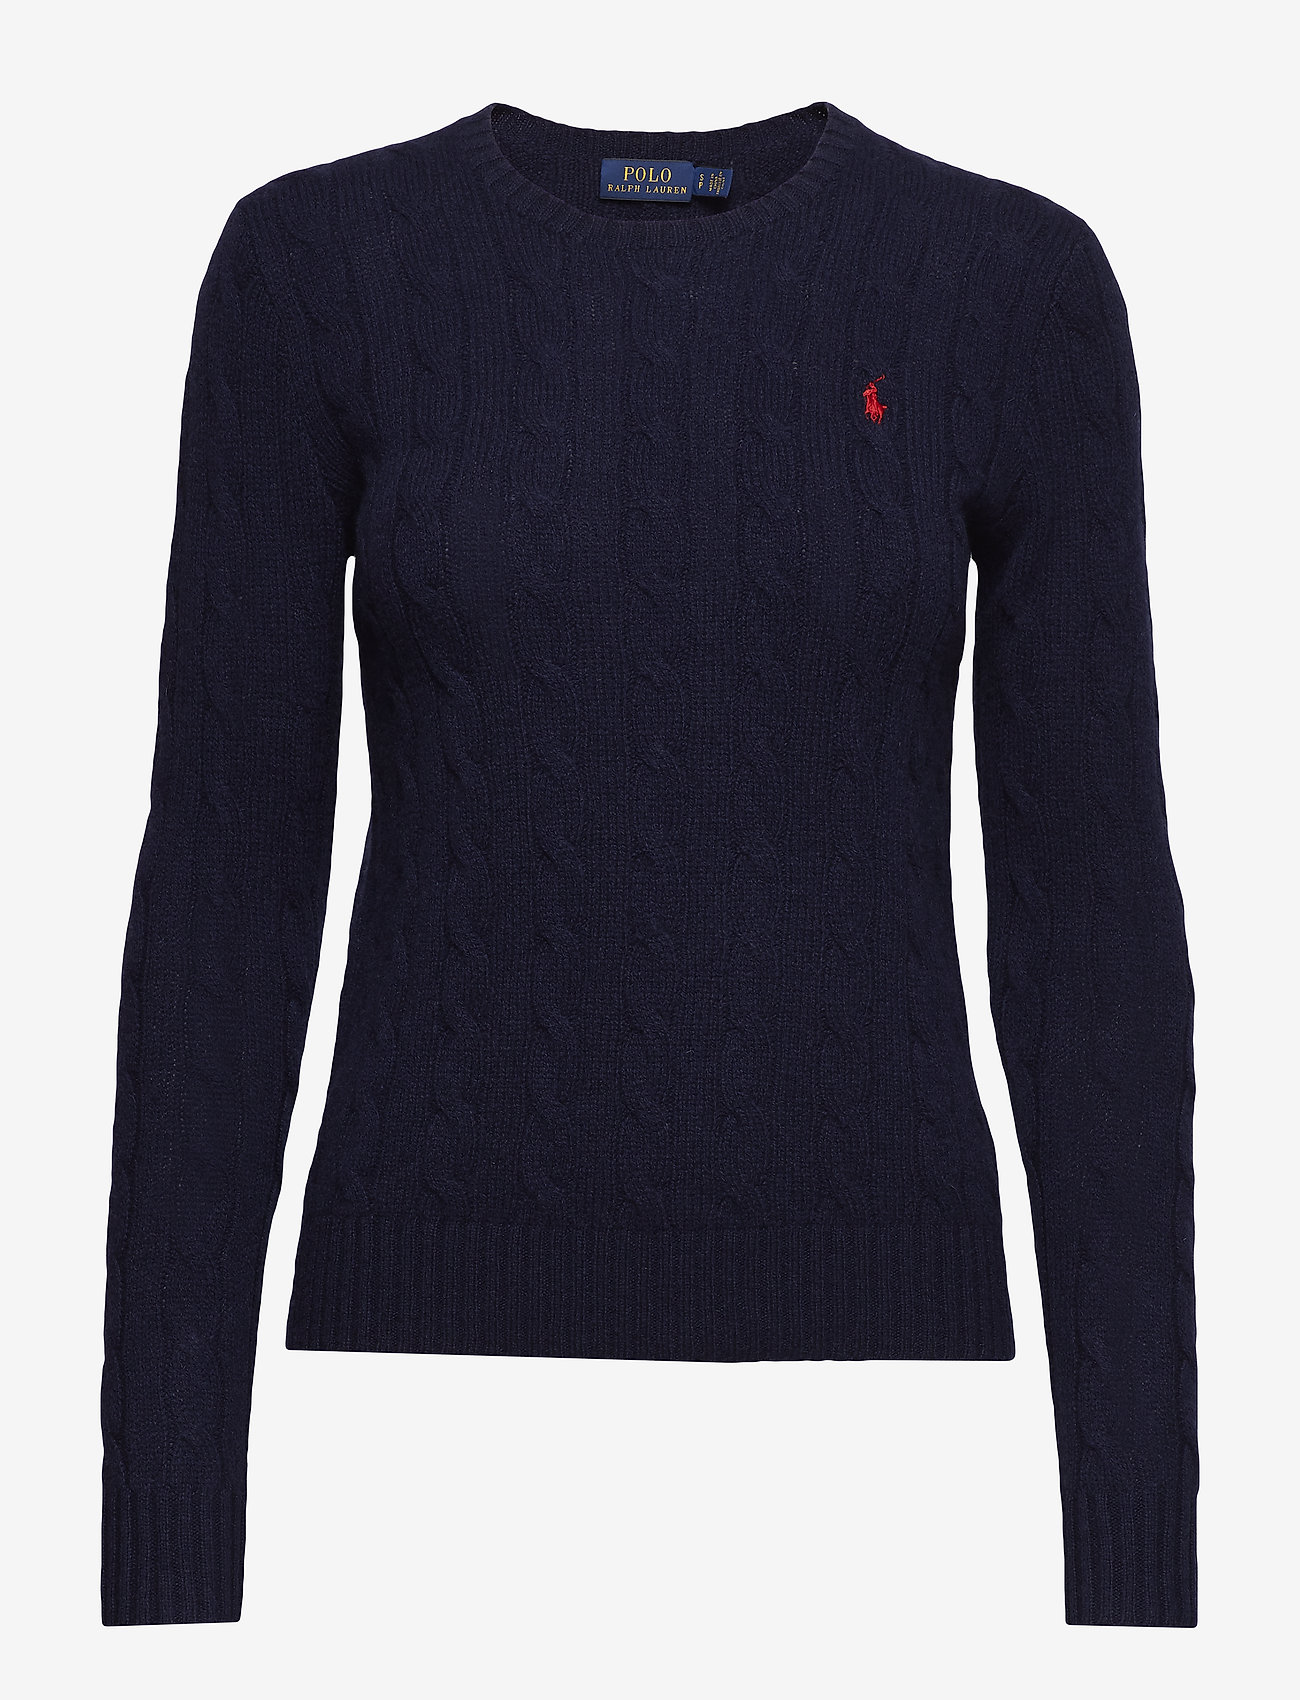 Wool-cashmere Crewneck Sweater (Hunter Navy) (976.50 kr) - Polo Ralph